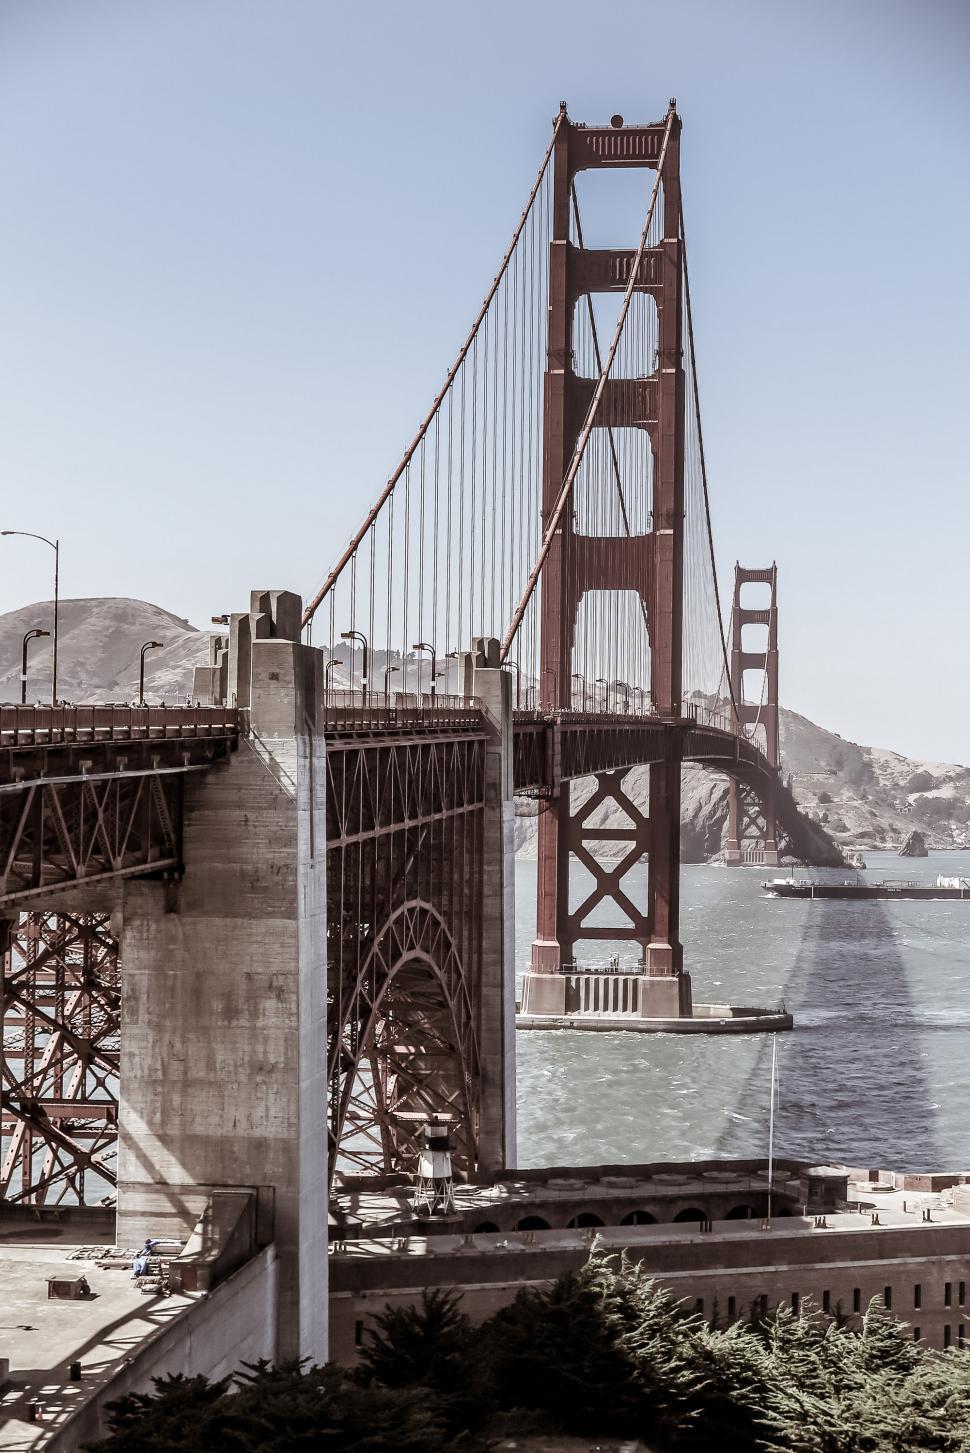 Free Image of Golden Gate Bridge Spans the Bay 